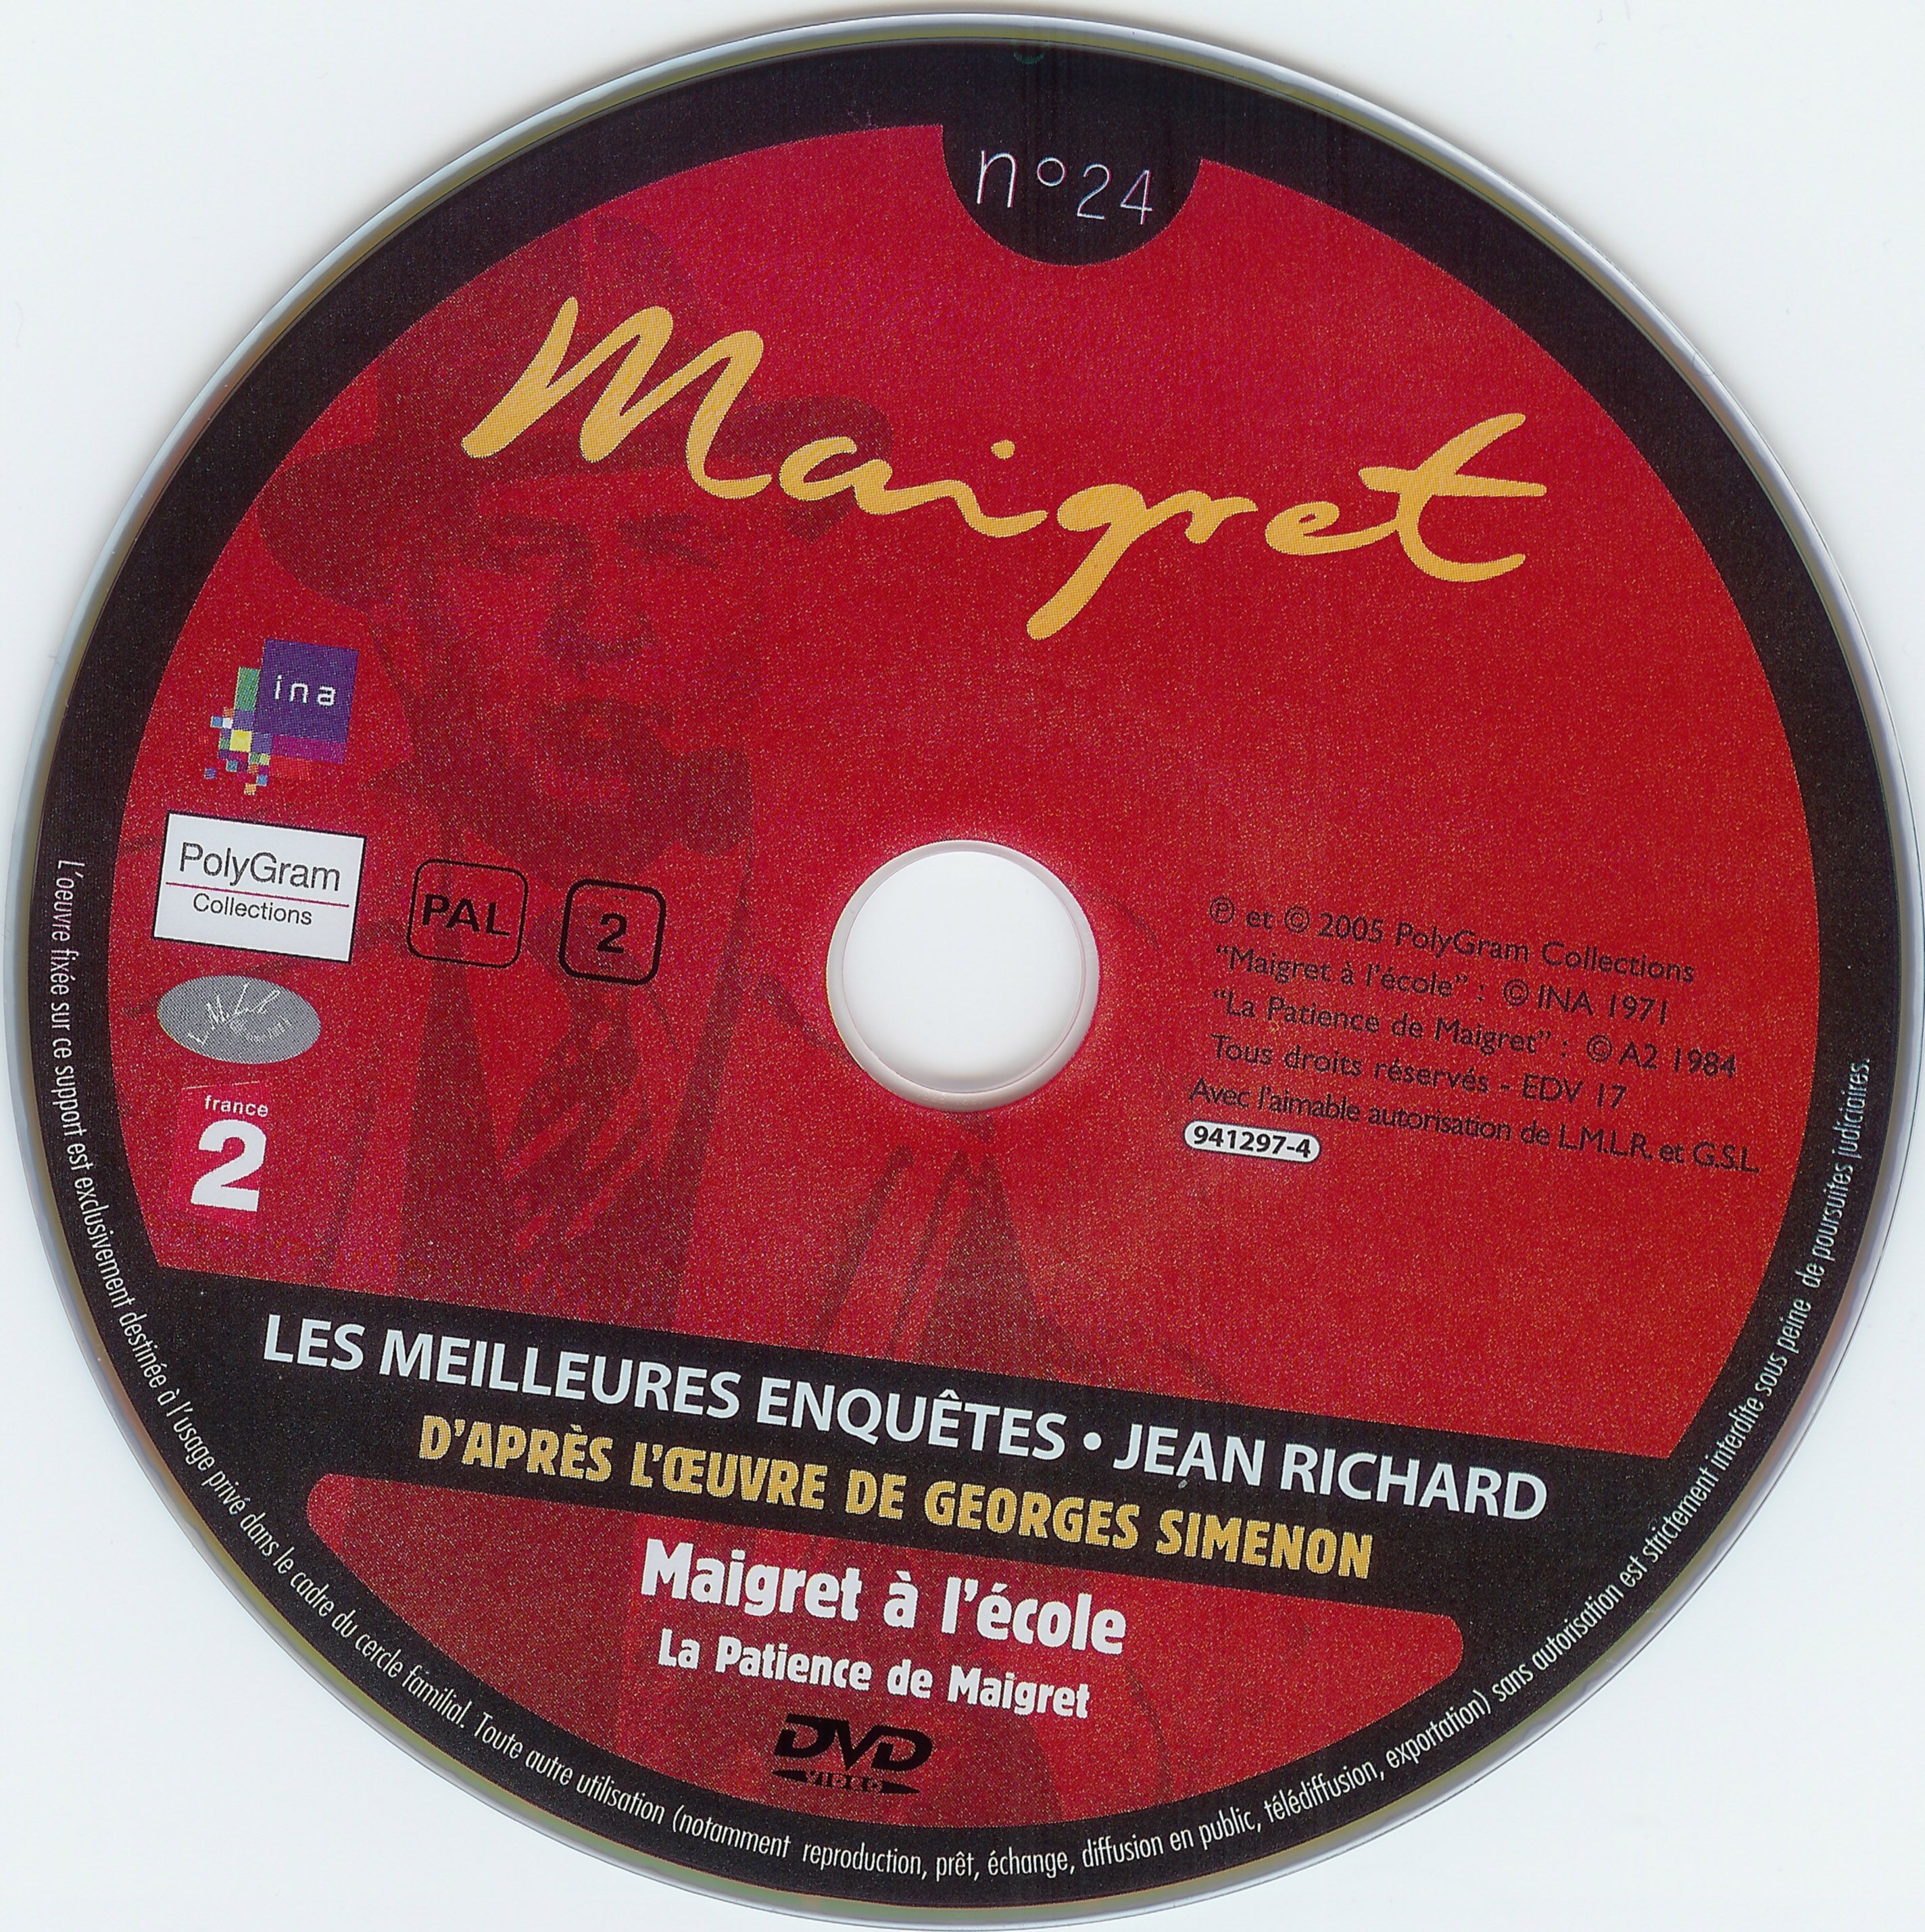 Maigret (Jean Richard) vol 24